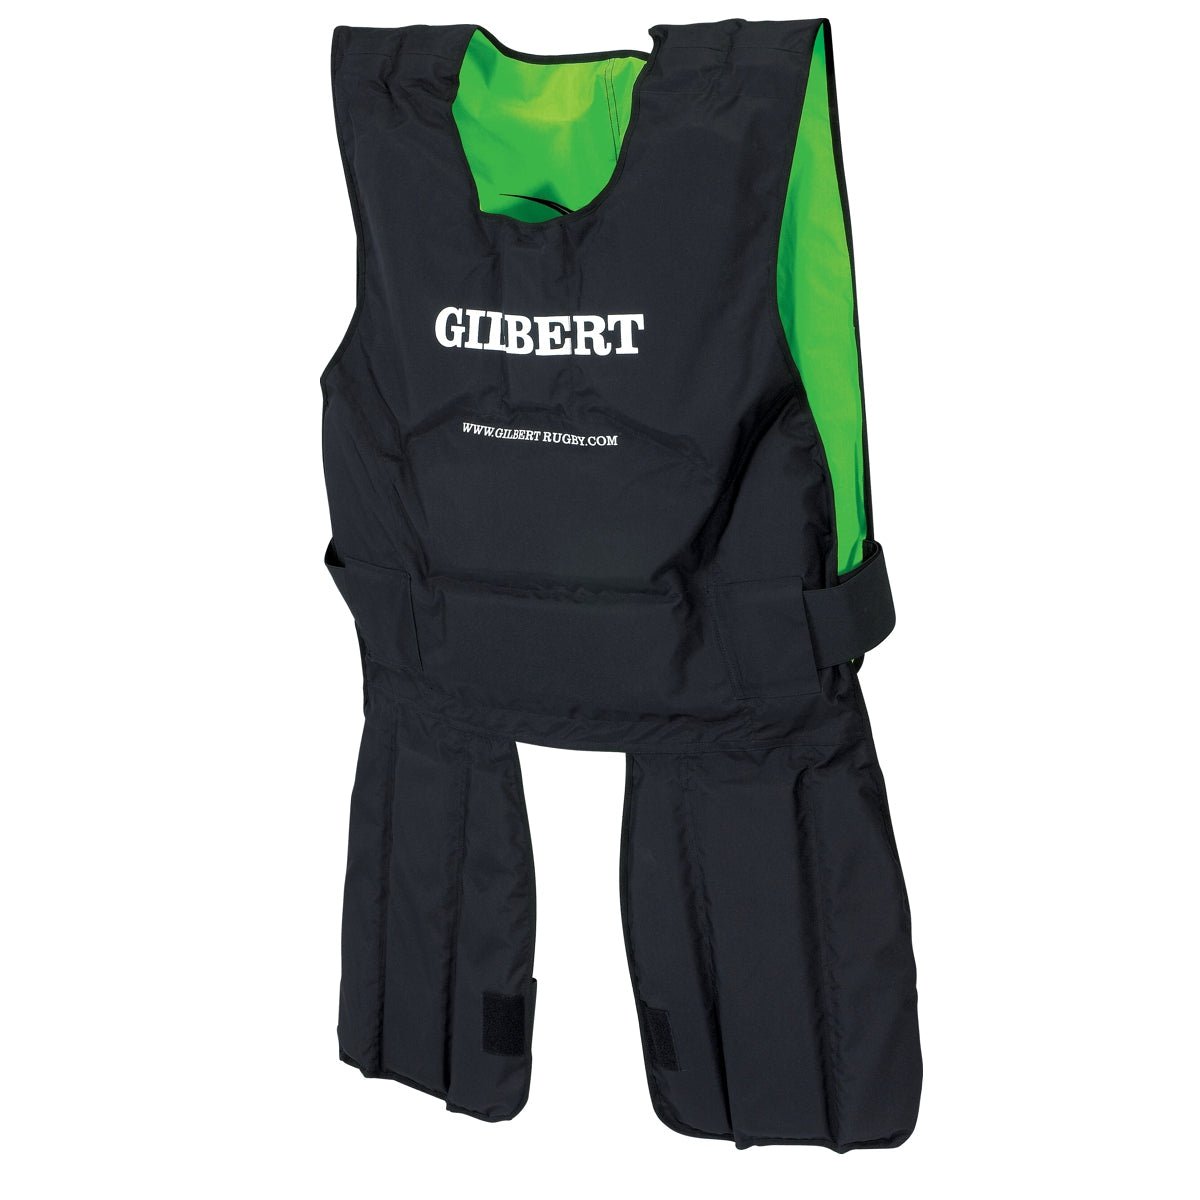 Gilber Rugby Contact Suit - Senior - Kiwisport.de